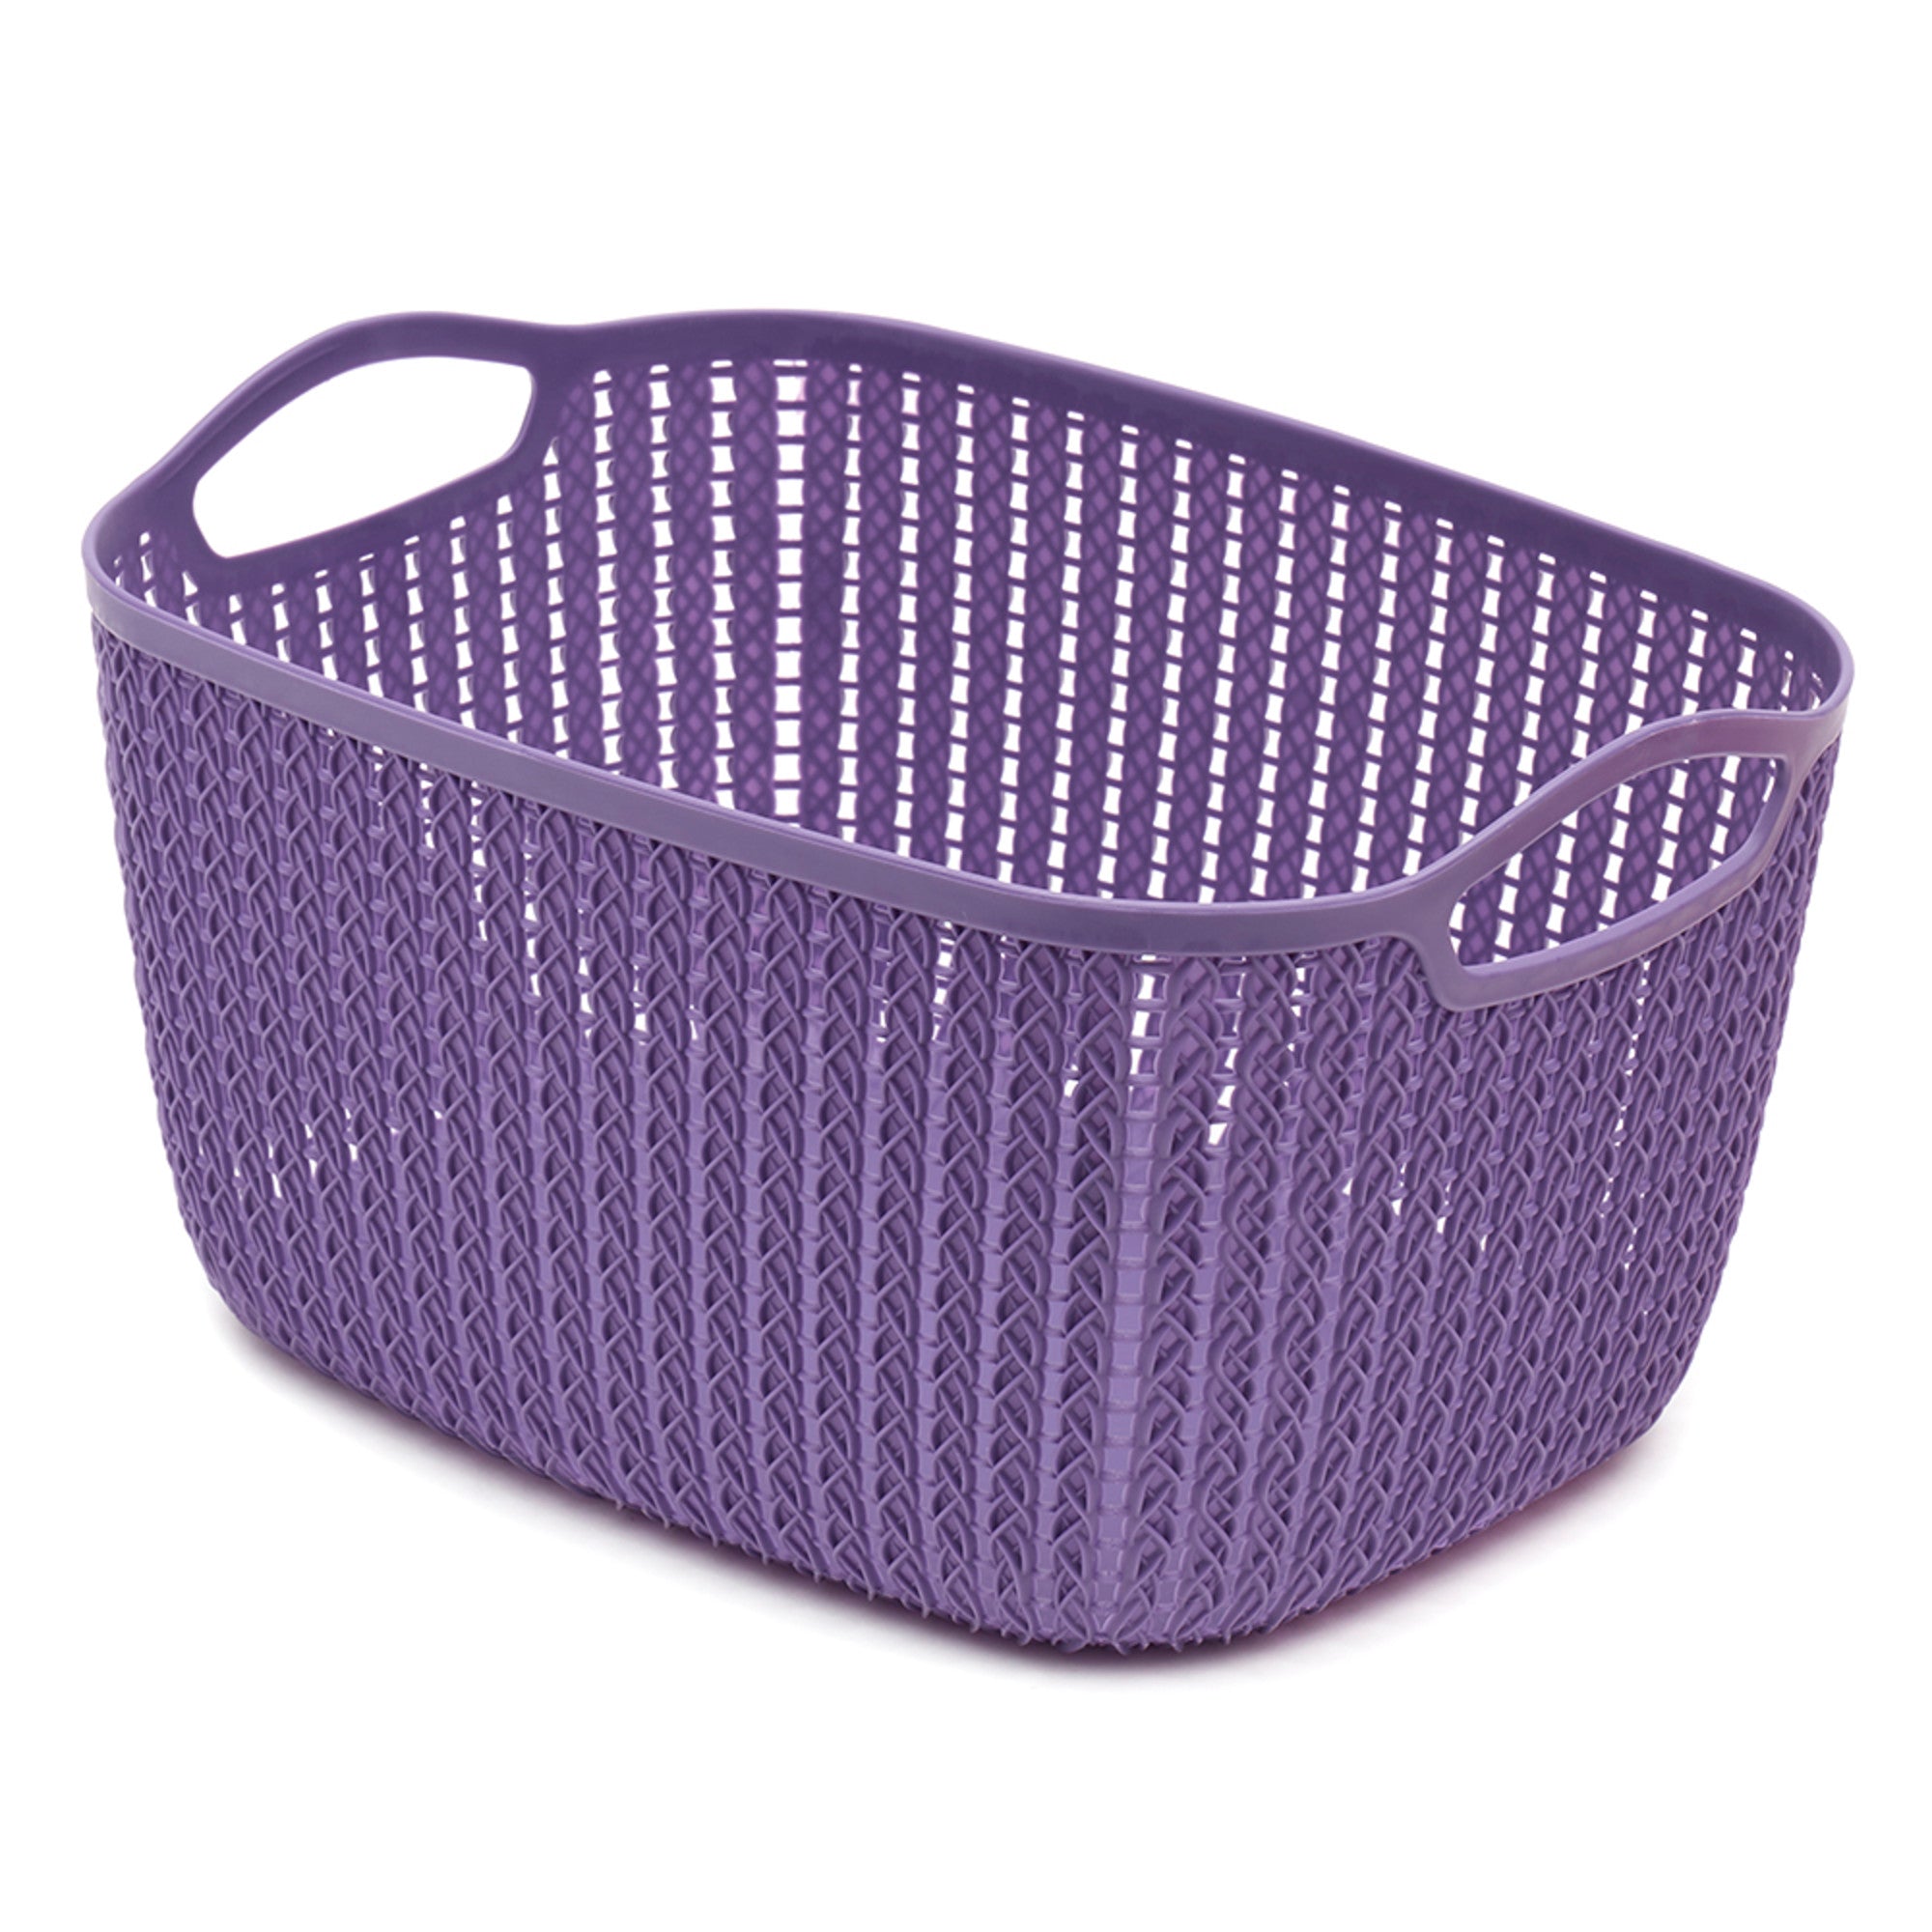 Home Basics Large Crochet Plastic Basket - Assorted Colors